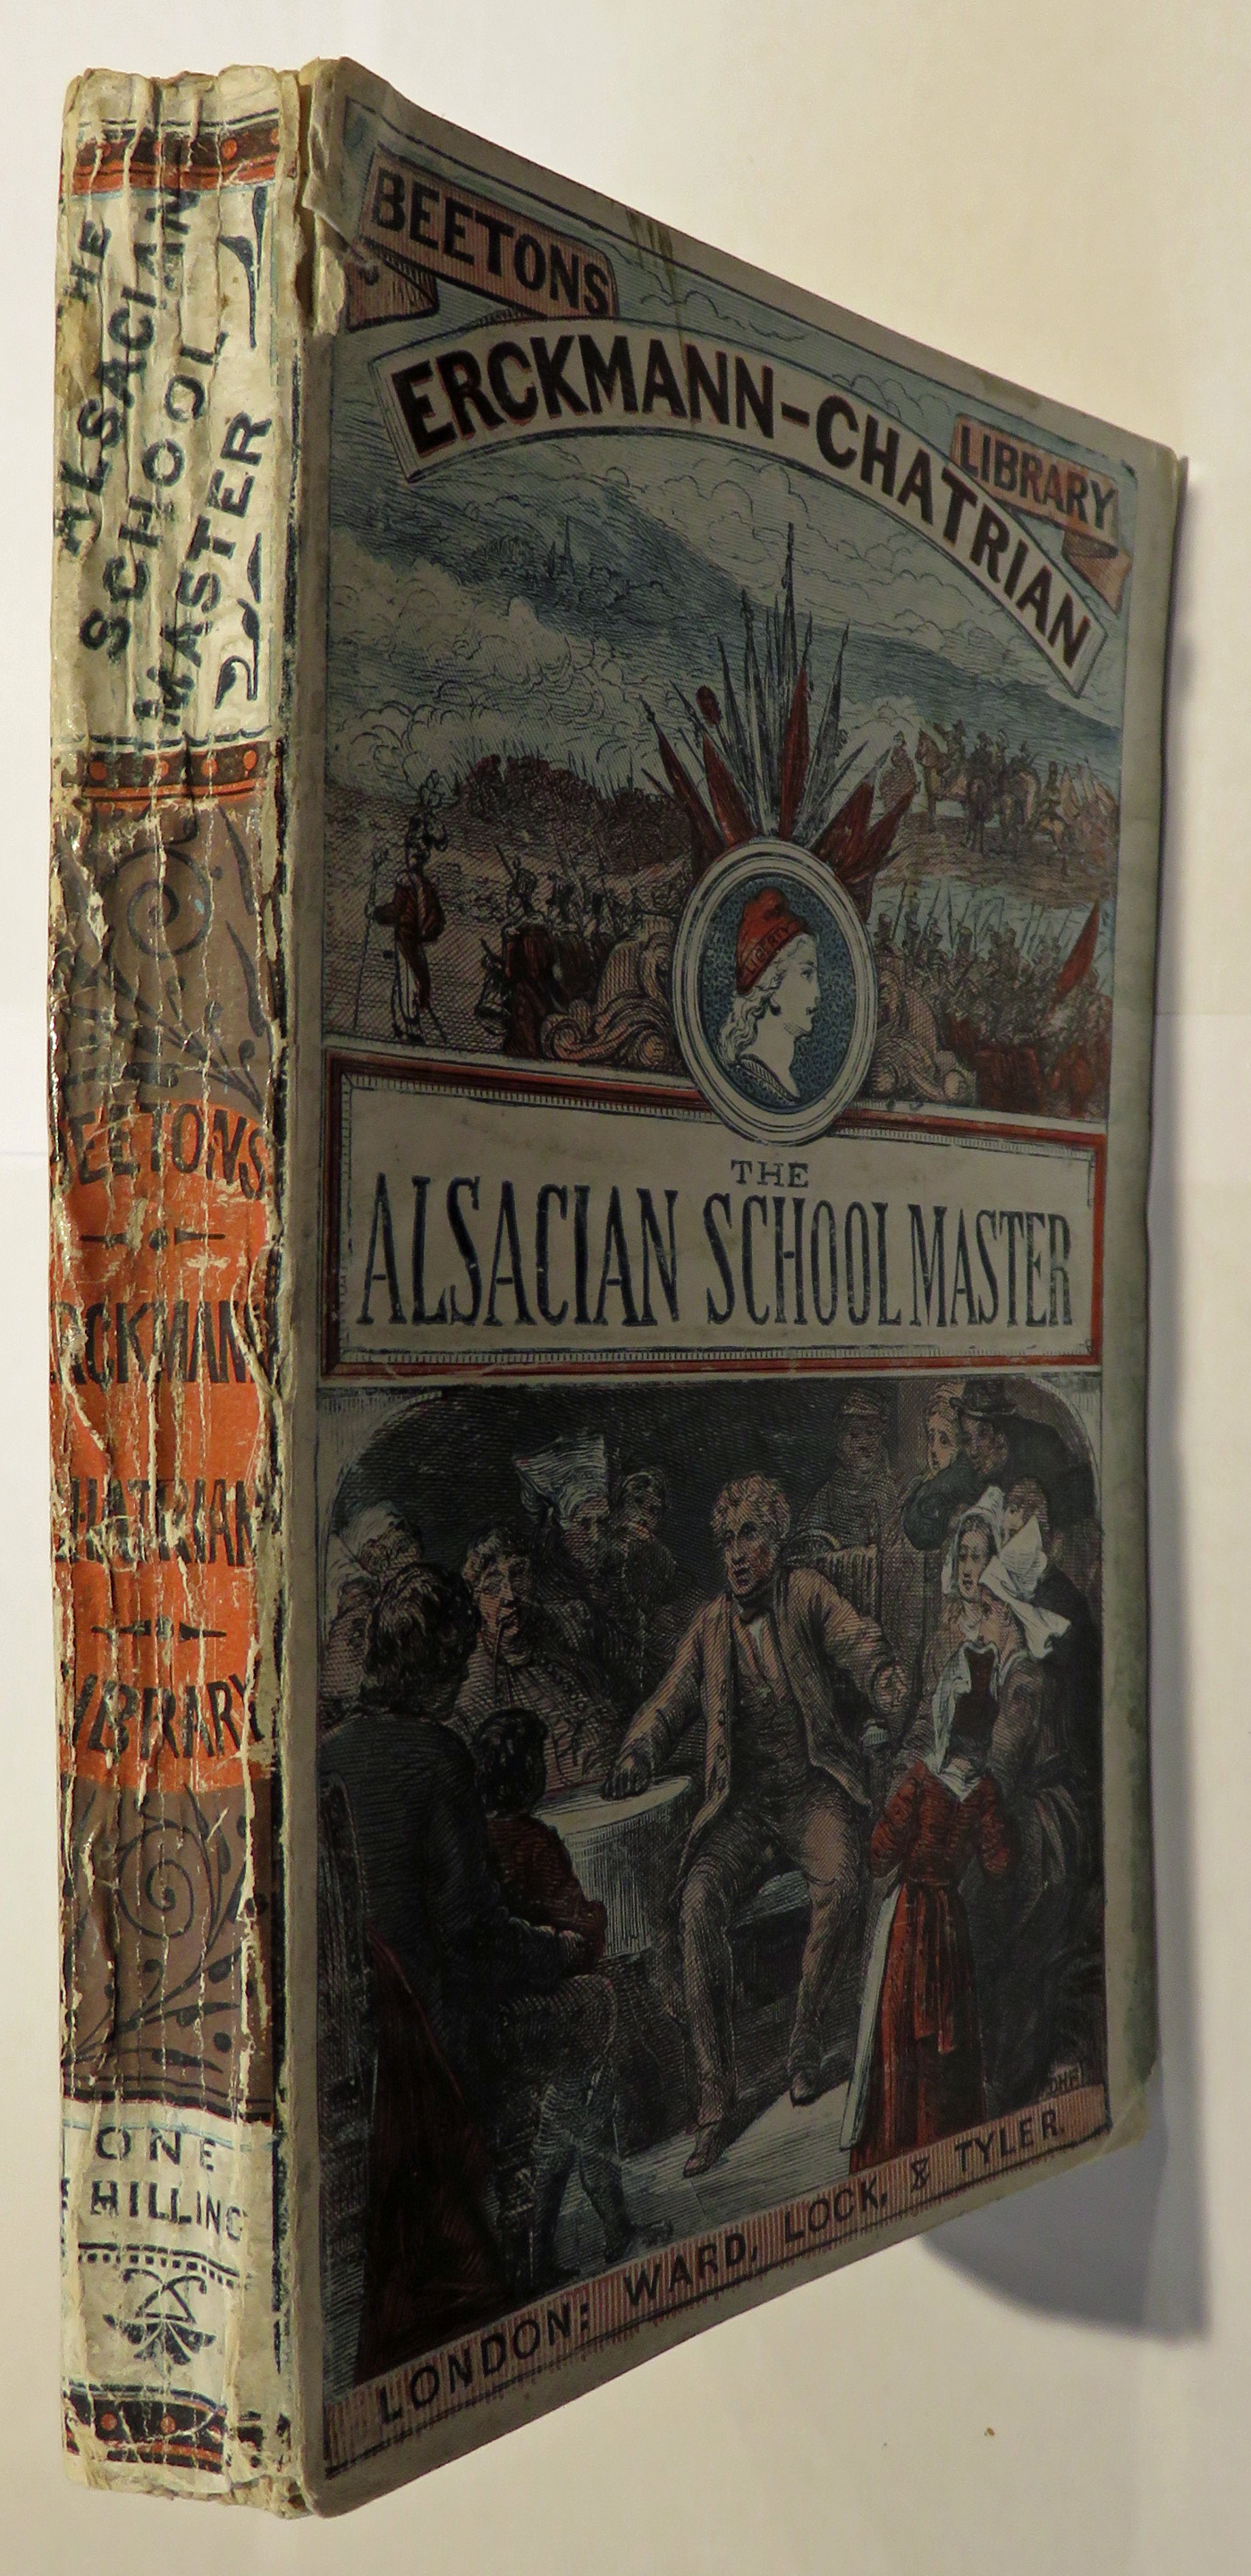 The Alsacian Schoolmaster. Beeton's Library 